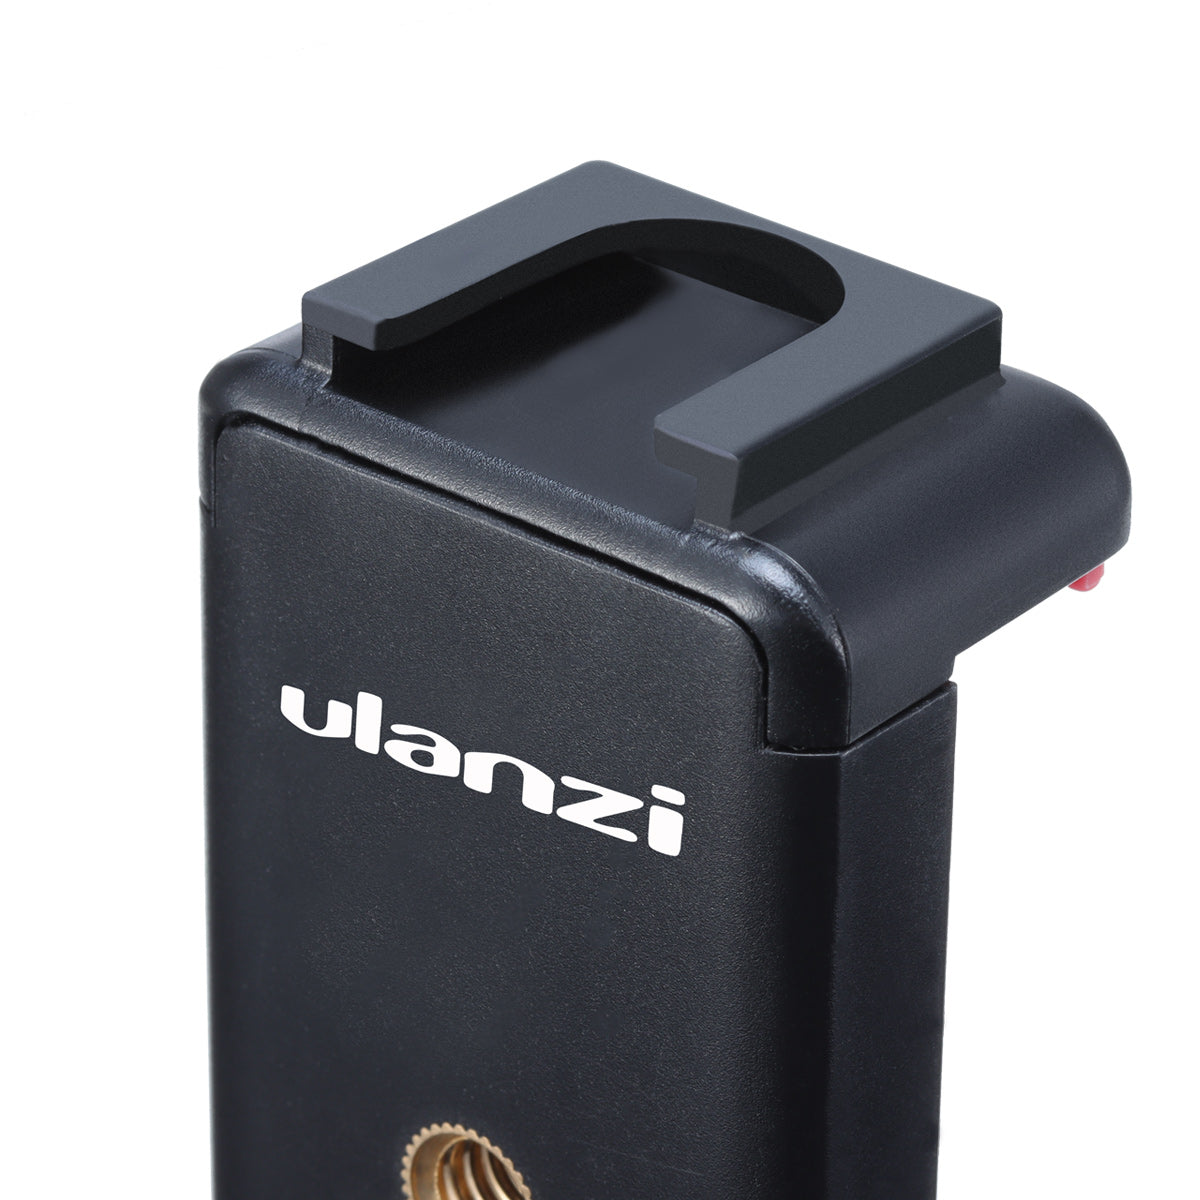 Ulanzi Phone holder ST-07 with Cold Shoe mount